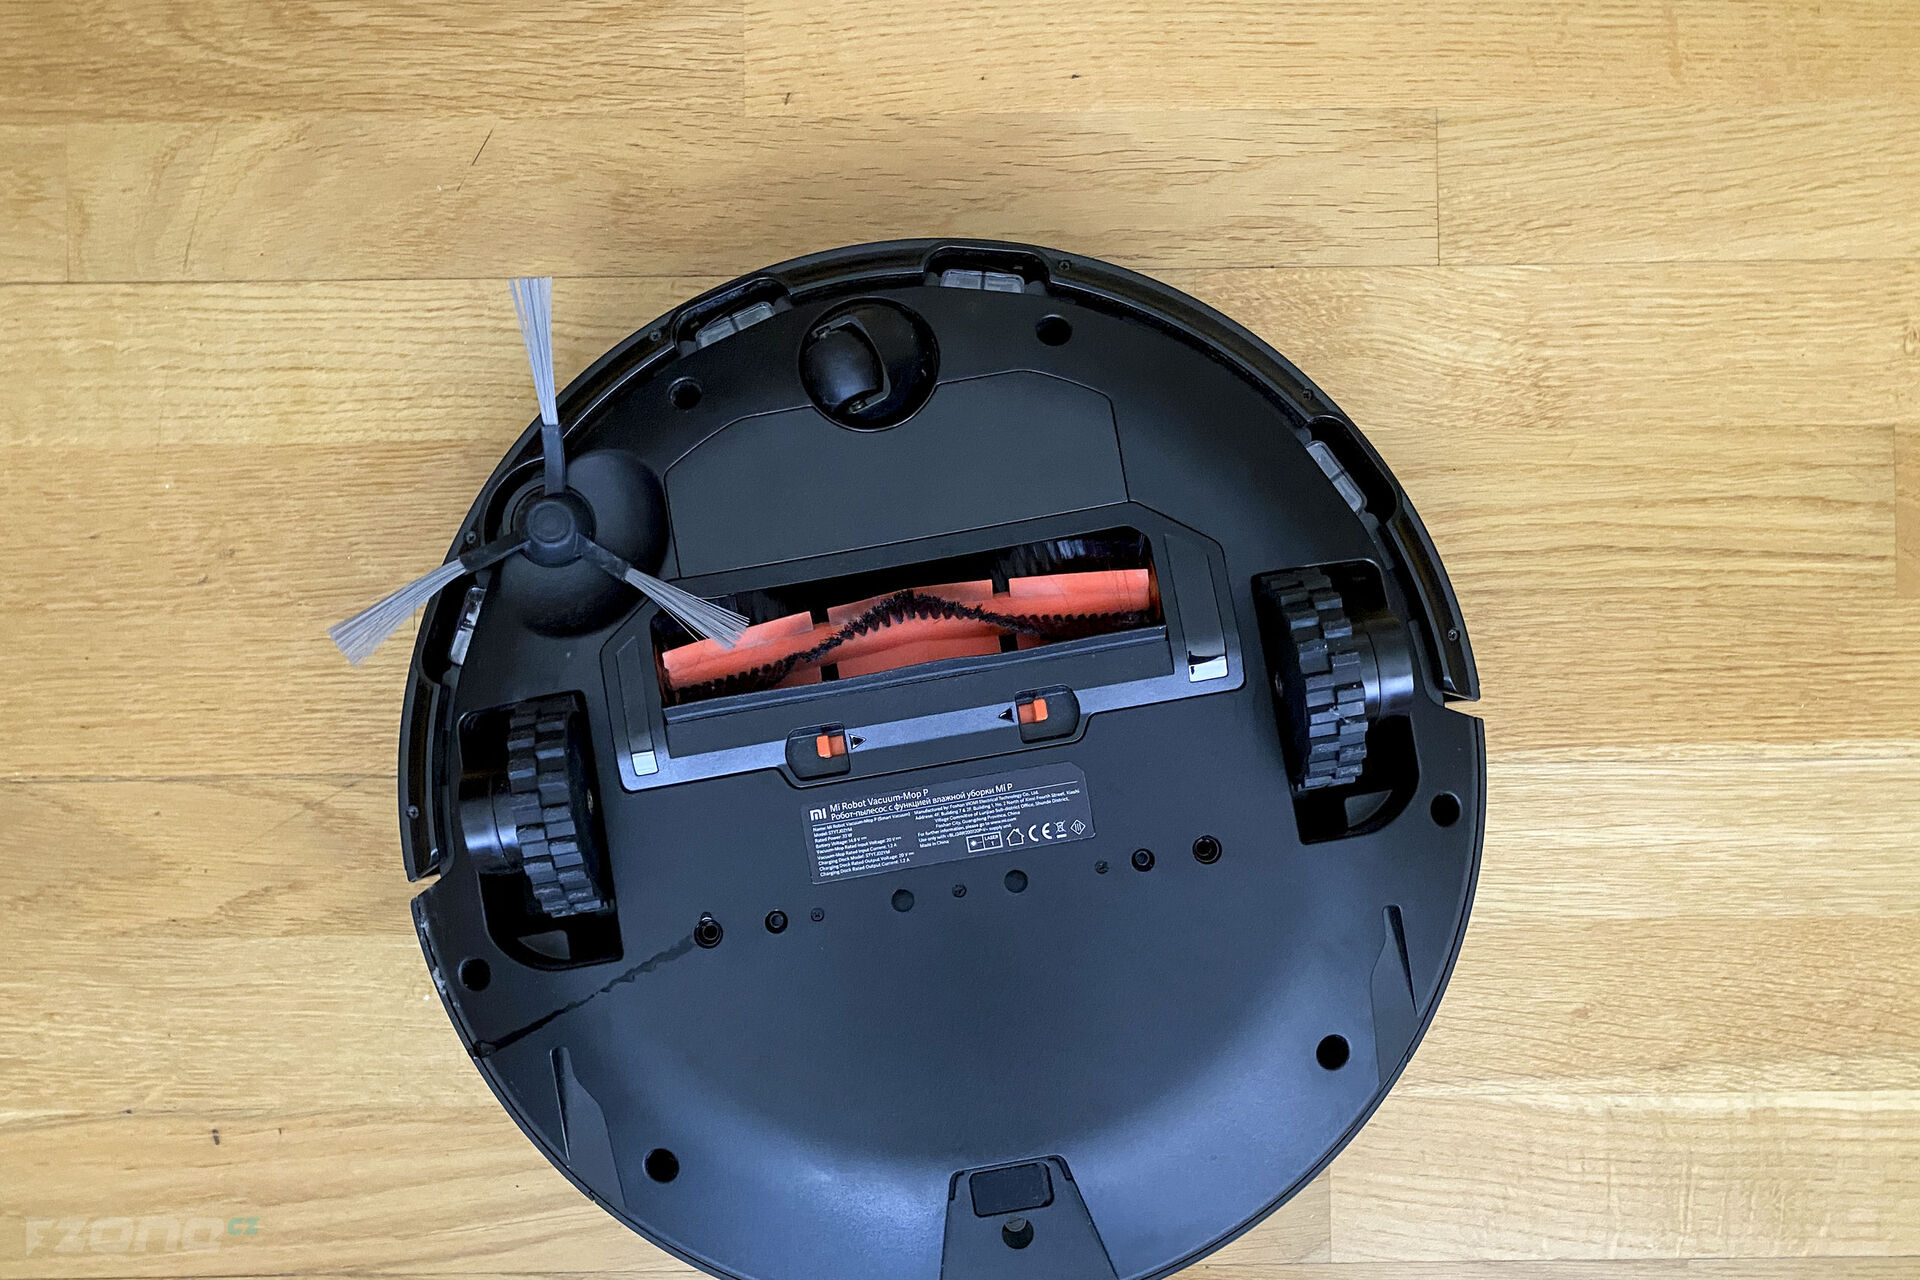 Xiaomi Mi Robot Vacuum Mop-P